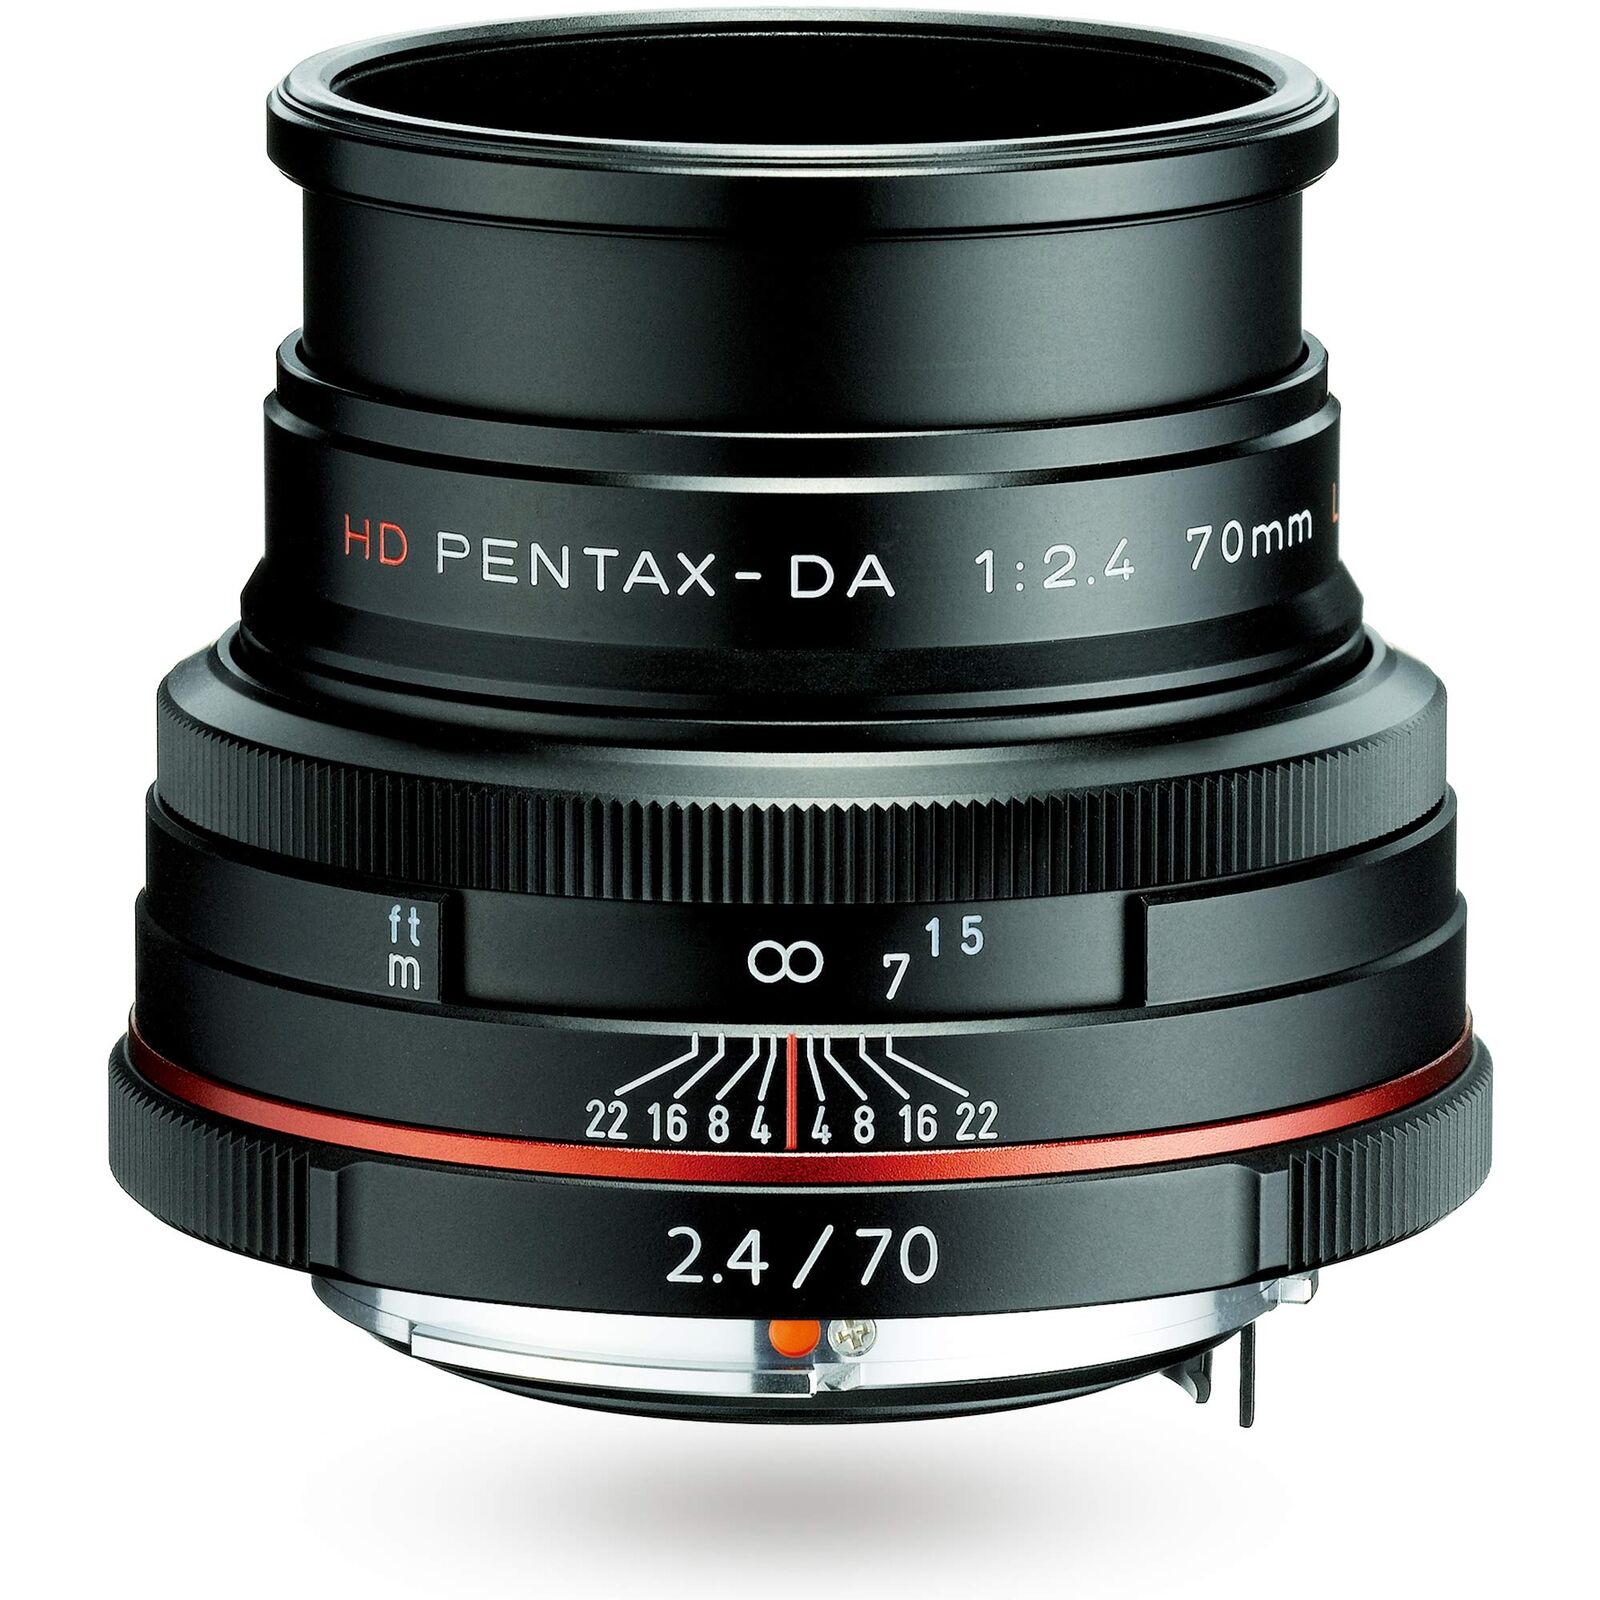 Pentax HD DA F2.4 Limited